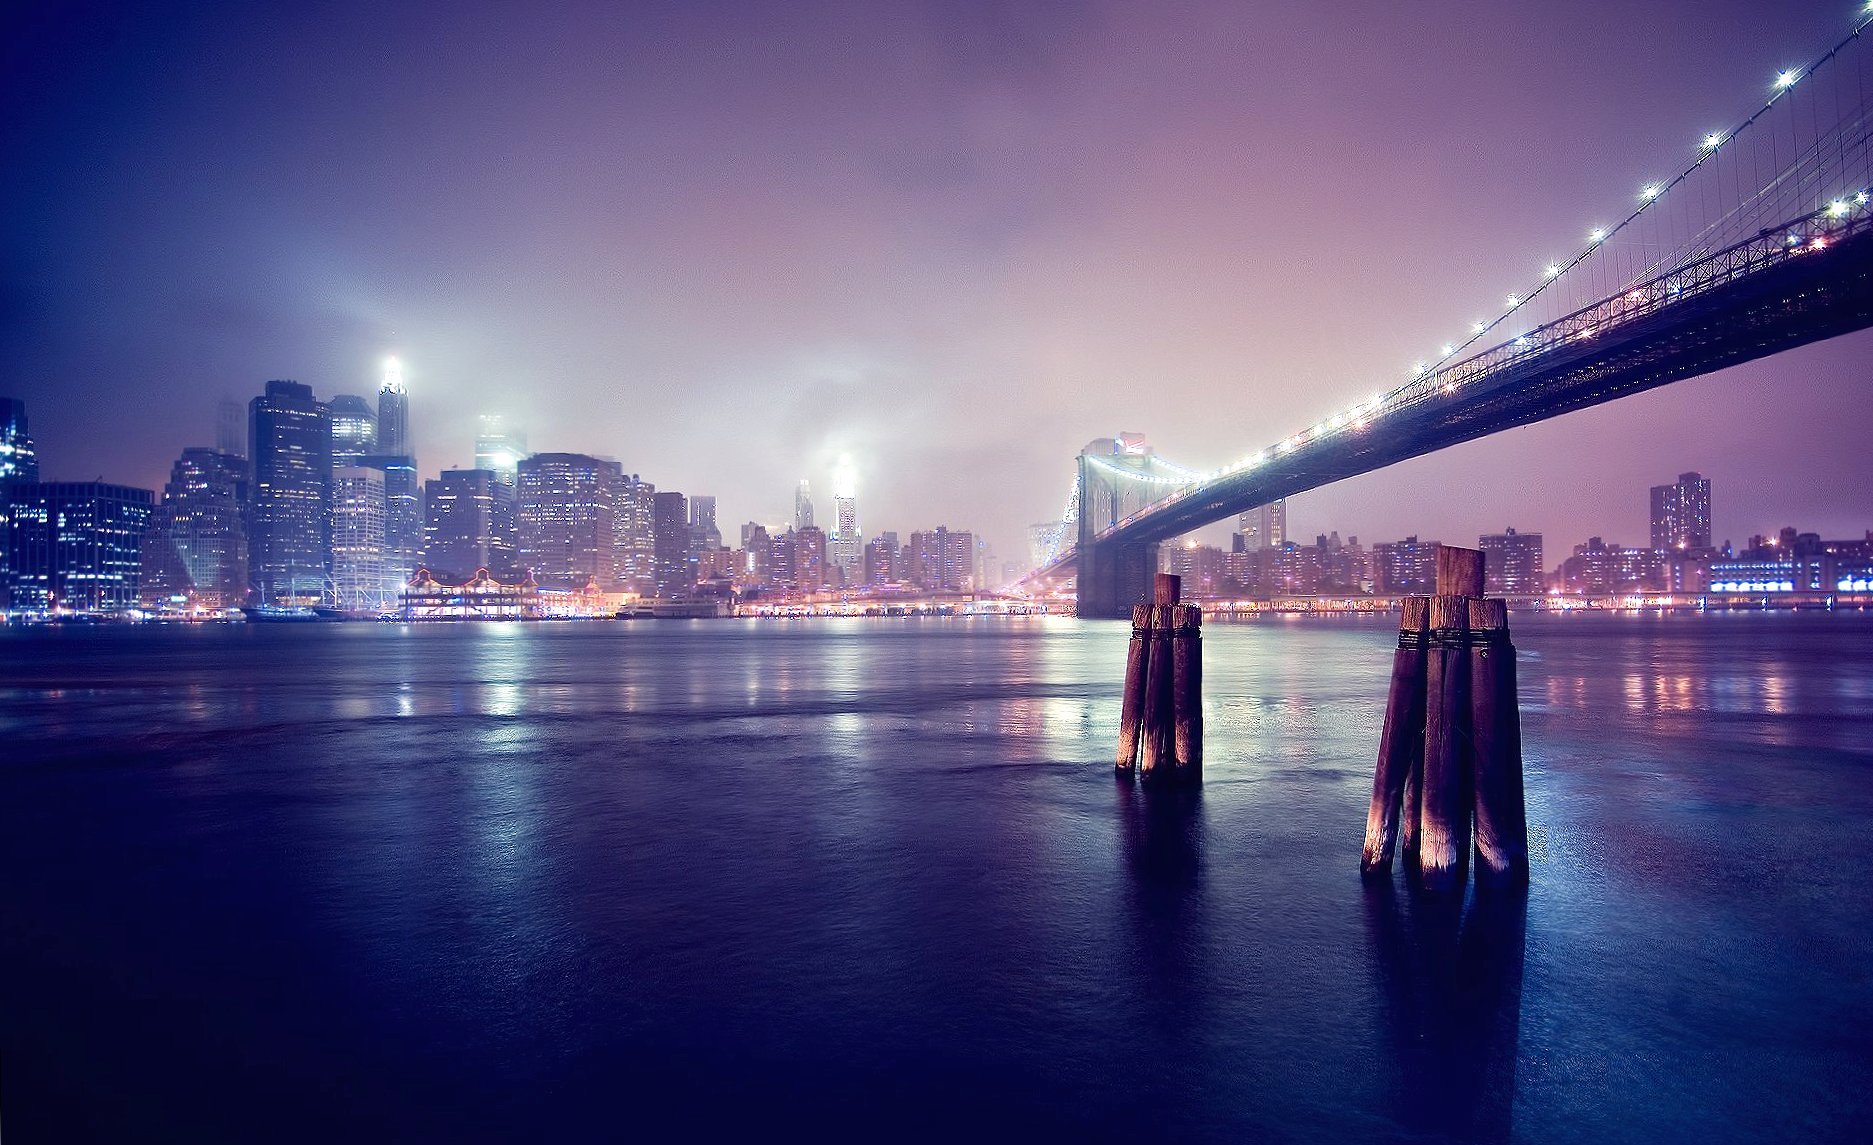 Night brooklyn bridge new york at 640 x 1136 iPhone 5 size wallpapers HD quality